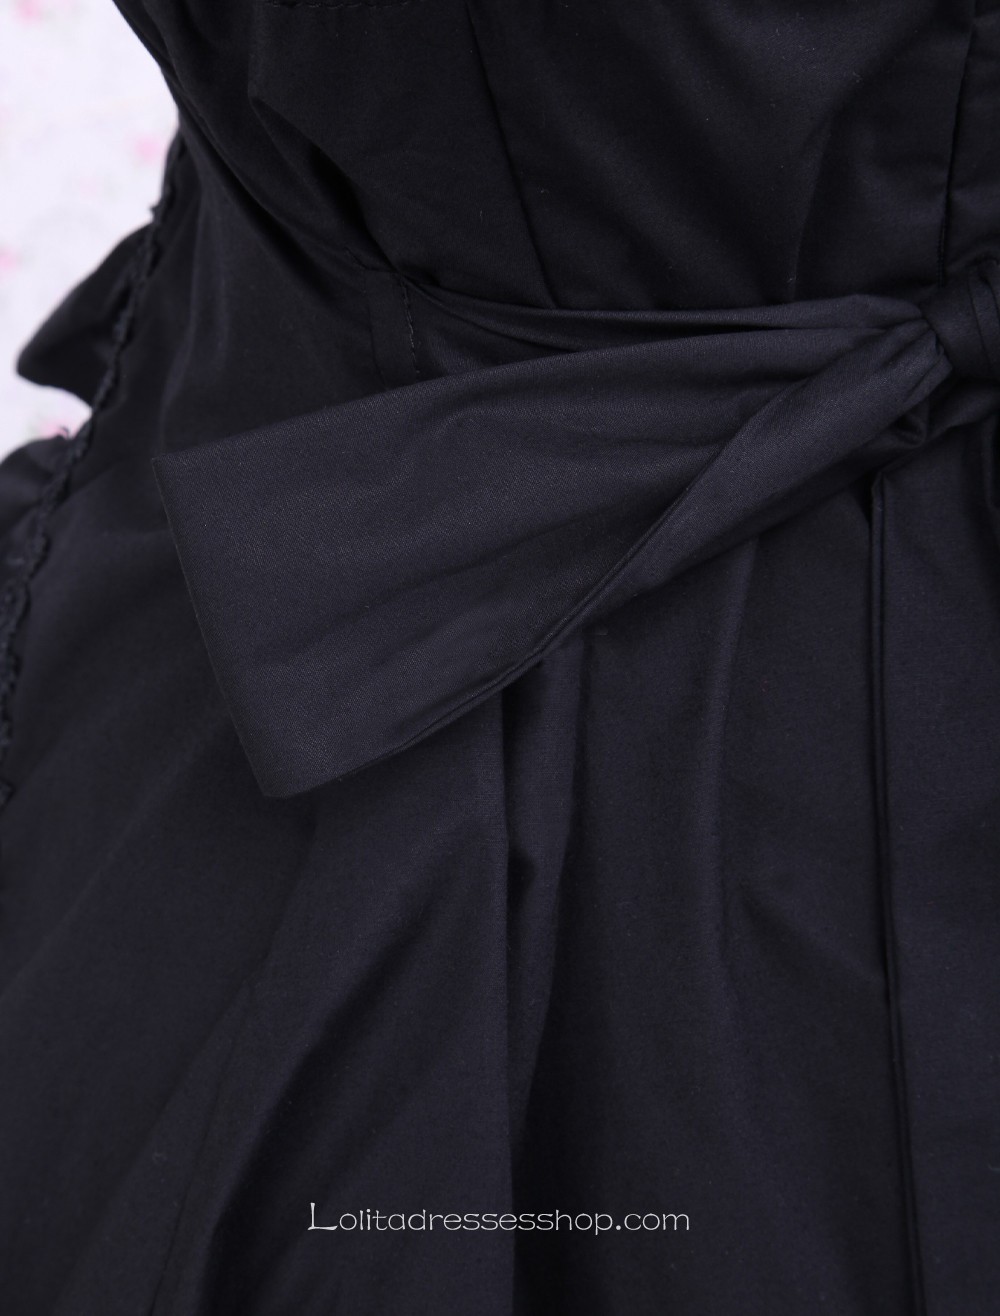 Cotton Three-Layers Bows Black And White Classic Lolita Dress